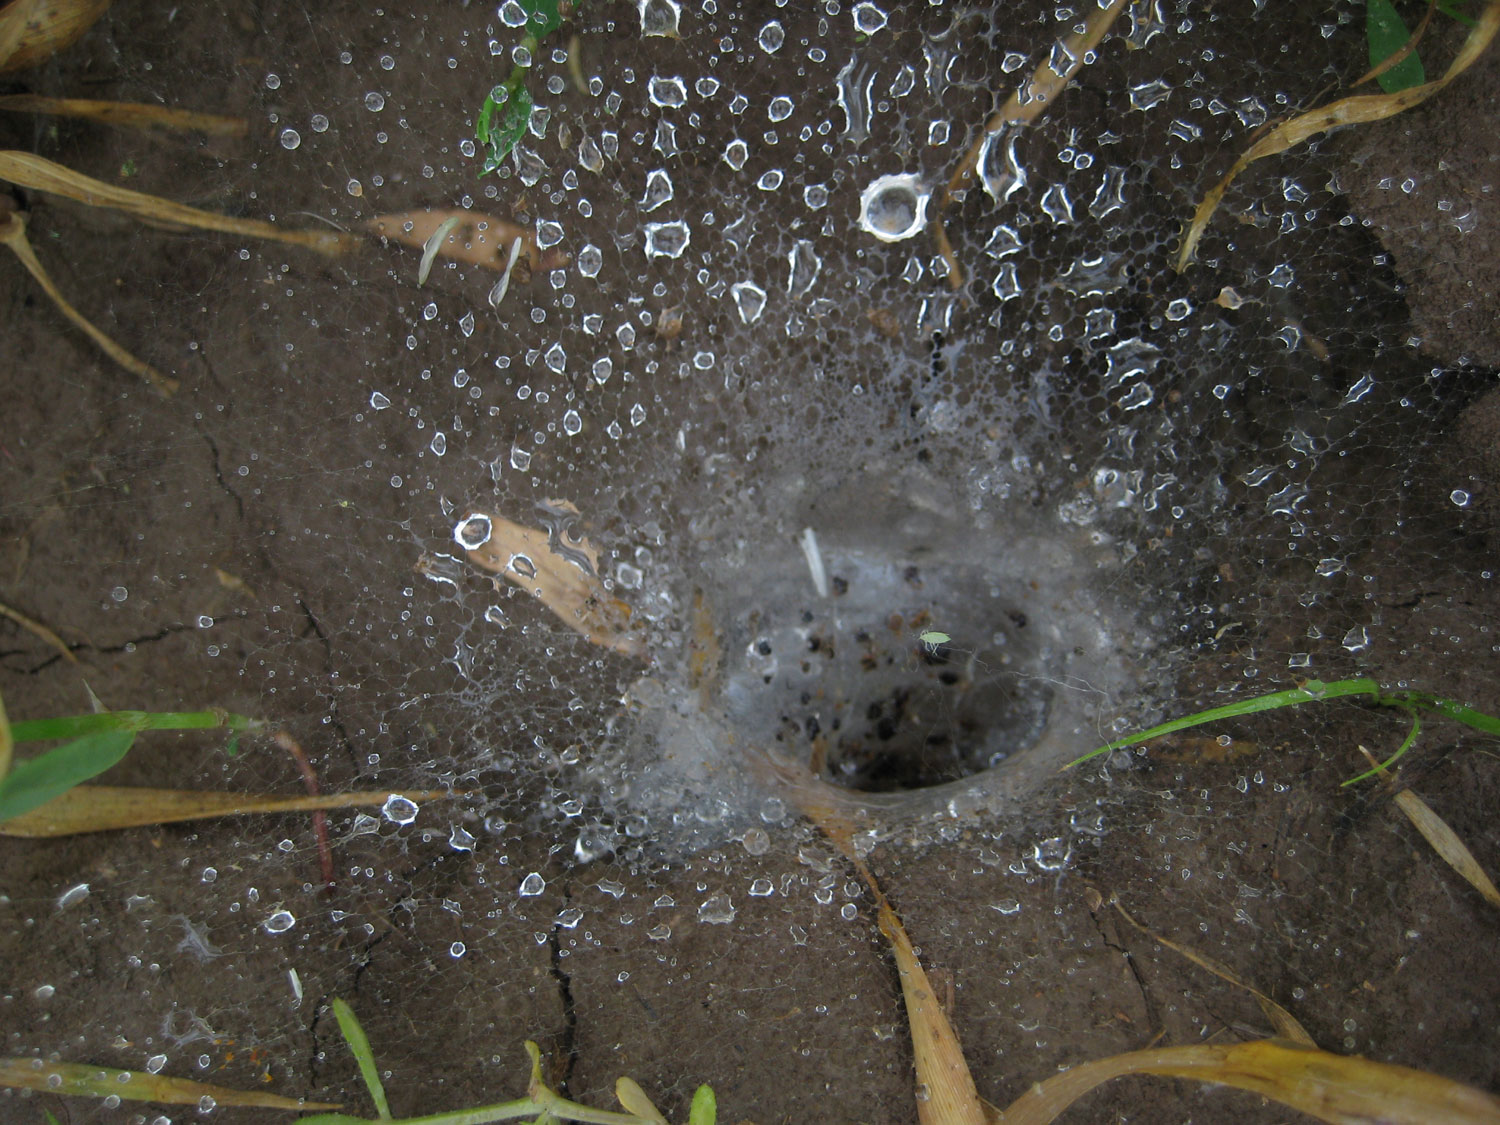 Nest of tarantula after rain